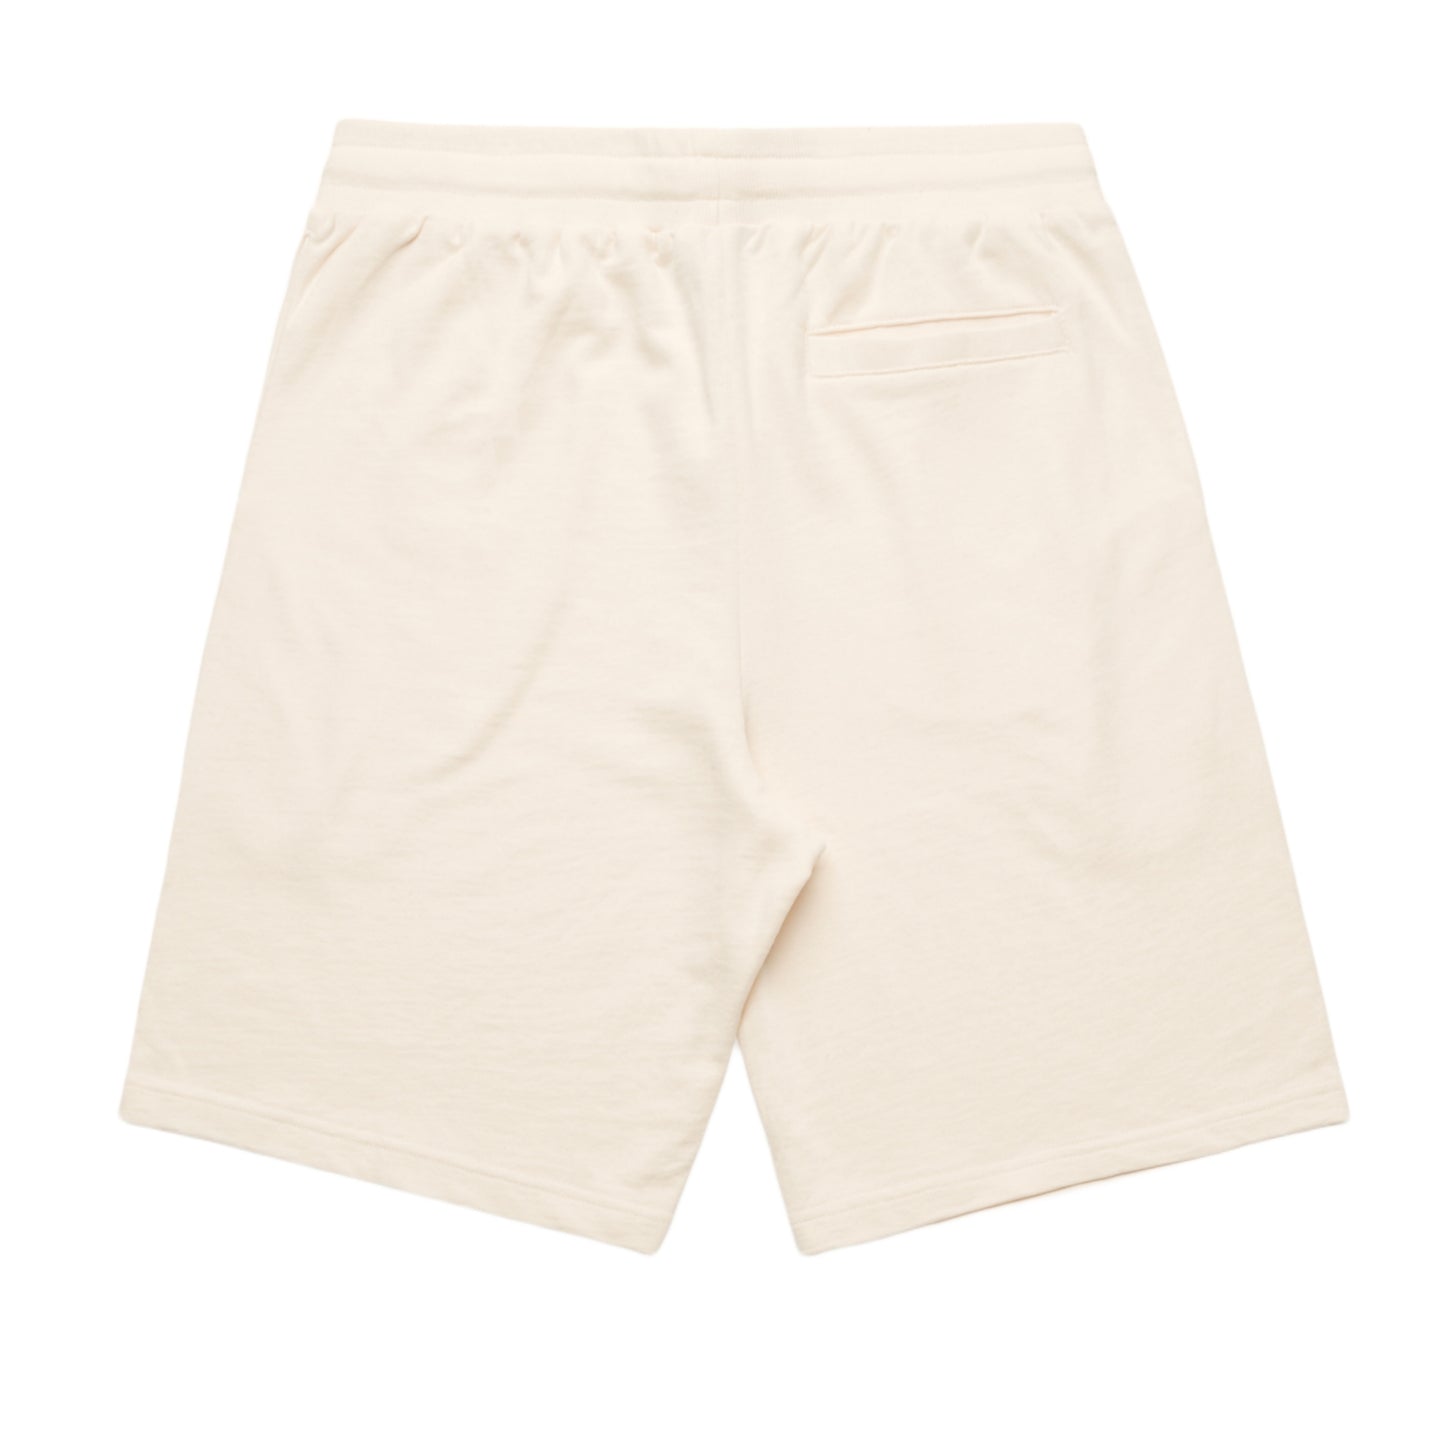 Combo Shorts Set (Lagoon & Cream)